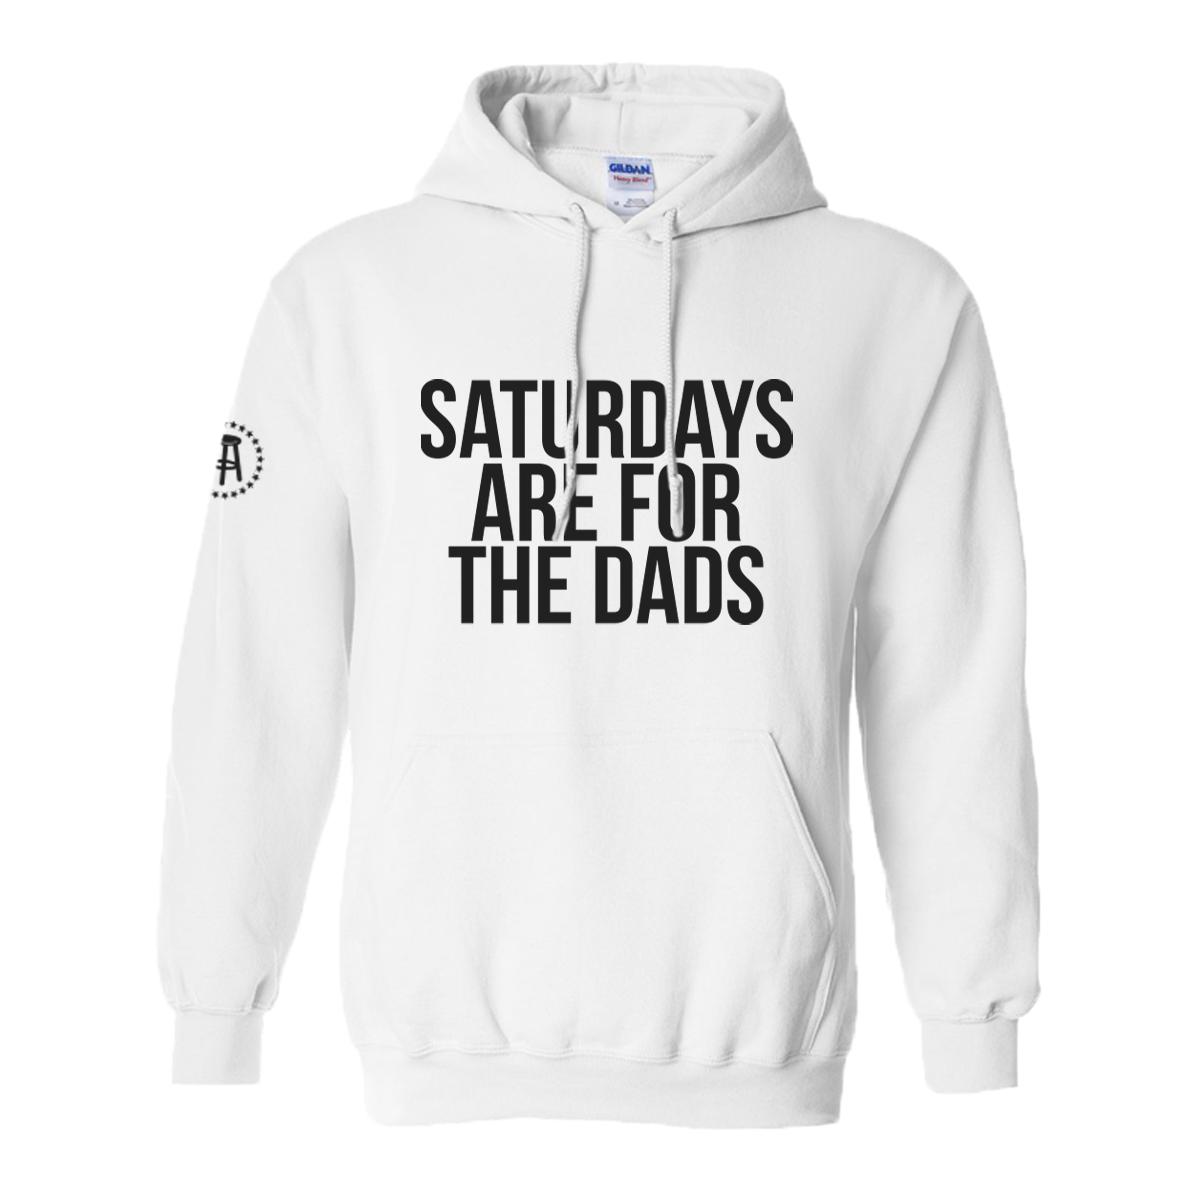 Saturdays Are For The Dads Hoodie-Hoodies & Sweatshirts-SAFTB-White-S-Barstool Sports